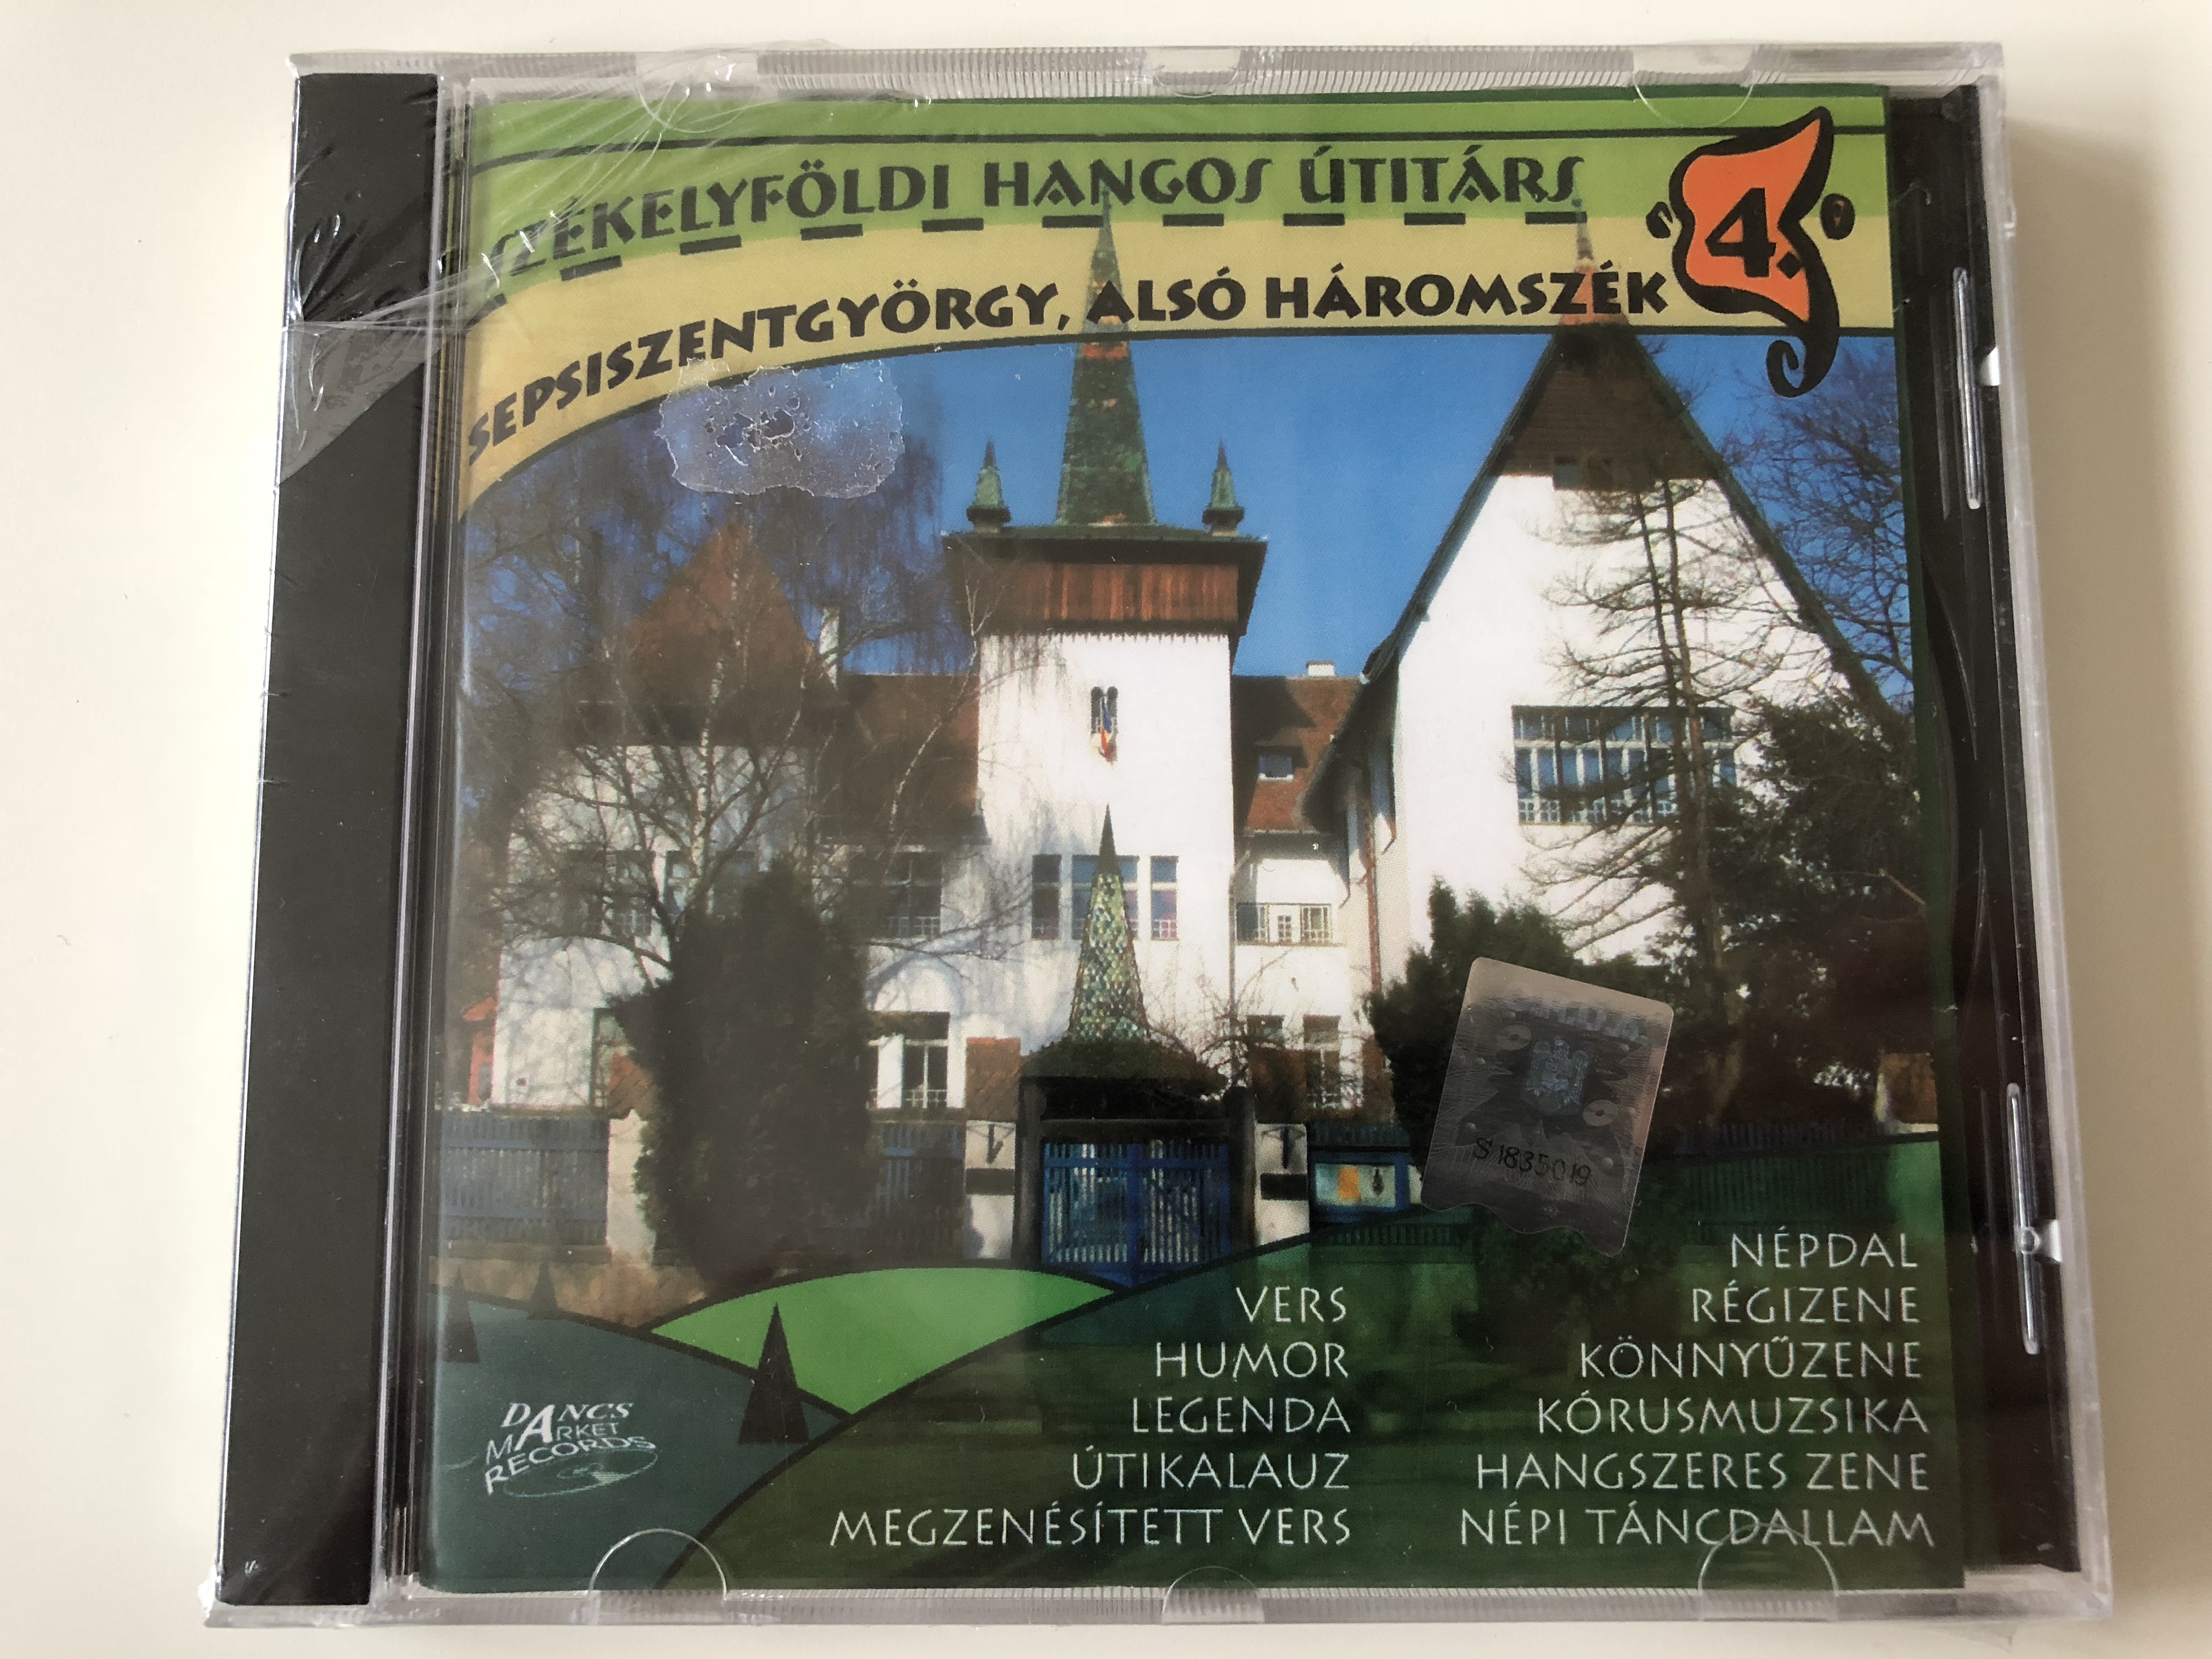 sz-kelyf-ldi-hangos-utit-rs-4.-sepsiszentgy-rgy-als-h-romsz-k-cd-2007-hungarian-audio-guide-to-transylvania-no.-4-dancs-market-records-1-.jpg